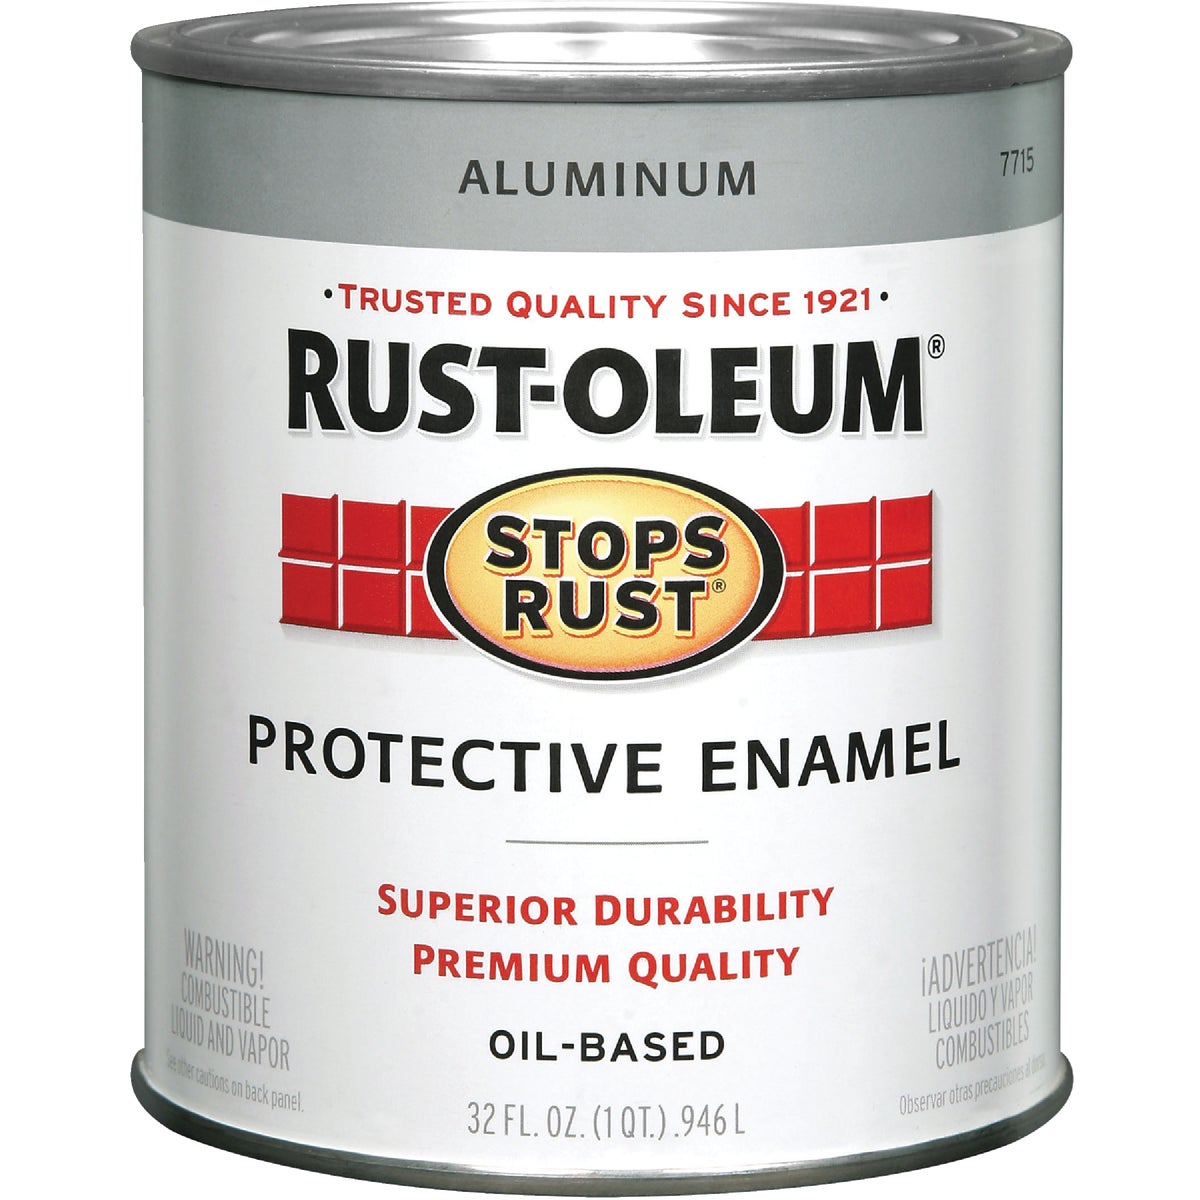 Rust-Oleum Stops Rust Oil Based Gloss Protective Rust Control Enamel, Aluminum, 1 Qt.